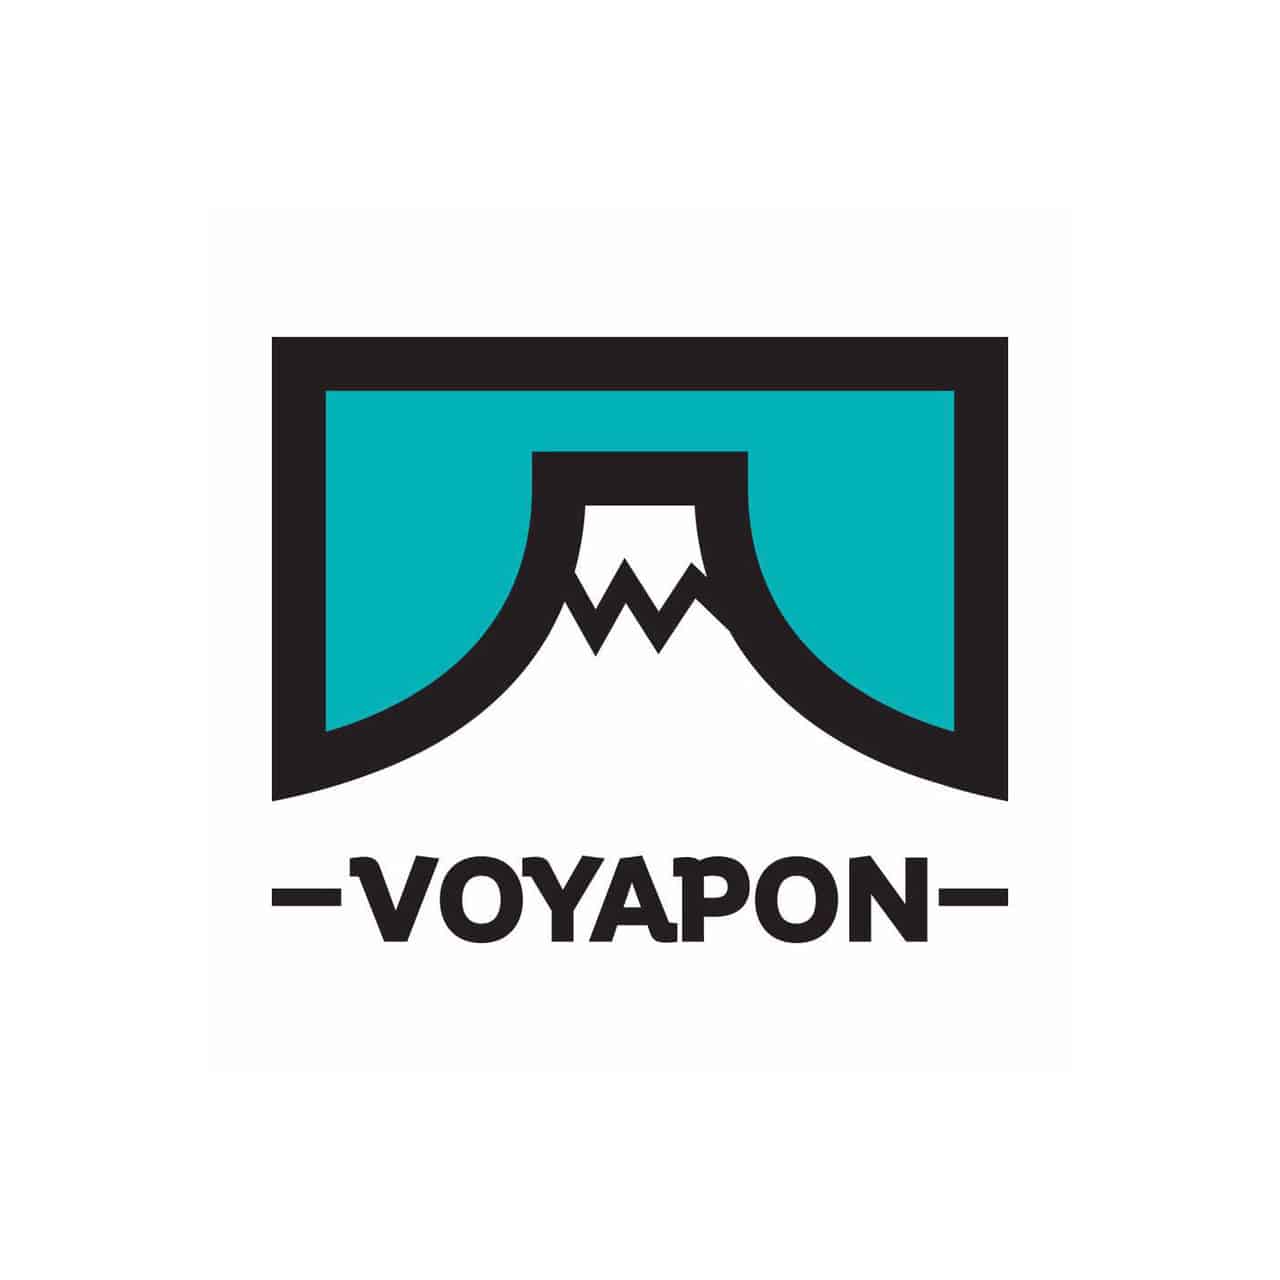 (c) Voyapon.com